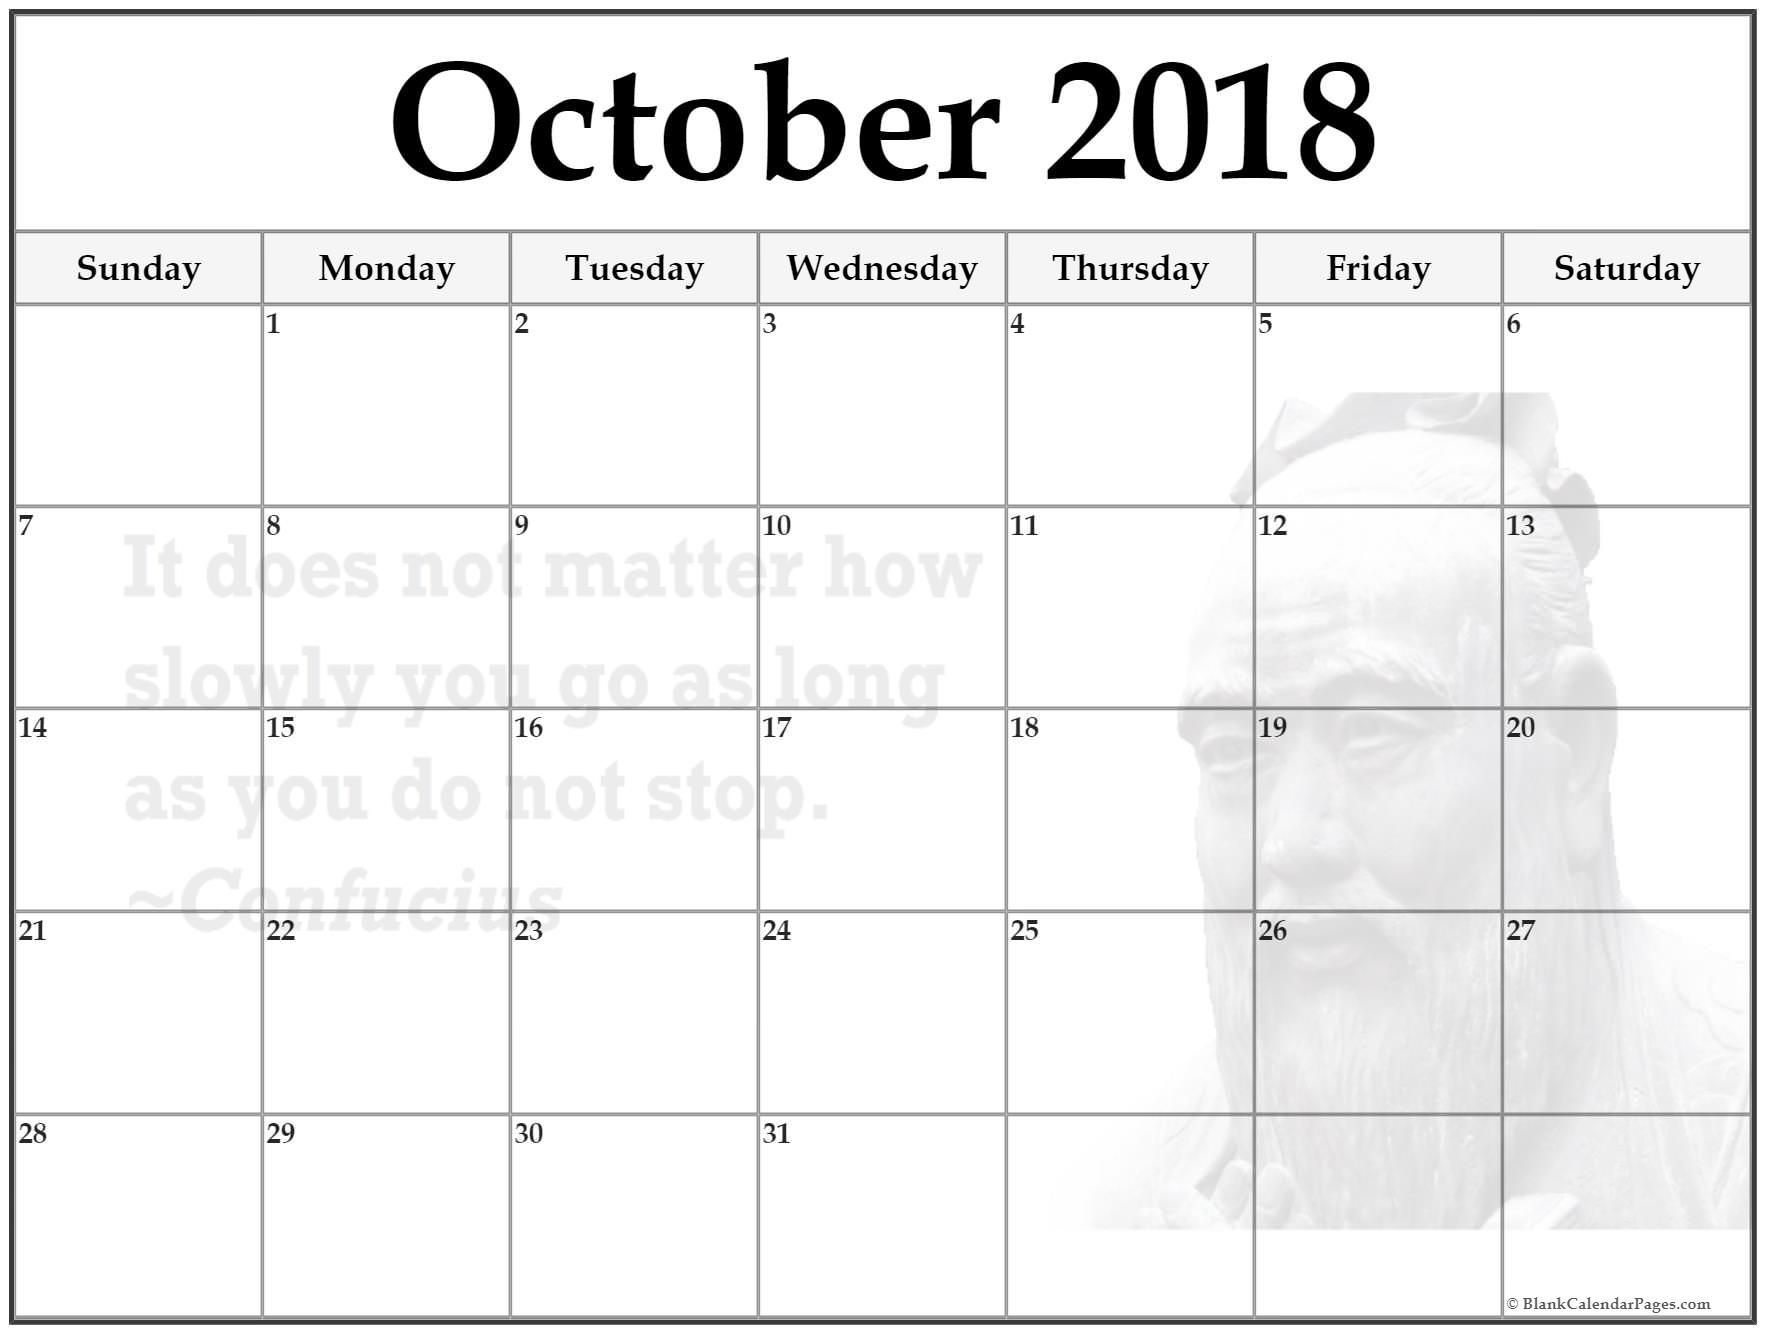 October 2018 Monthly Calendar Template. It Does Not Matter